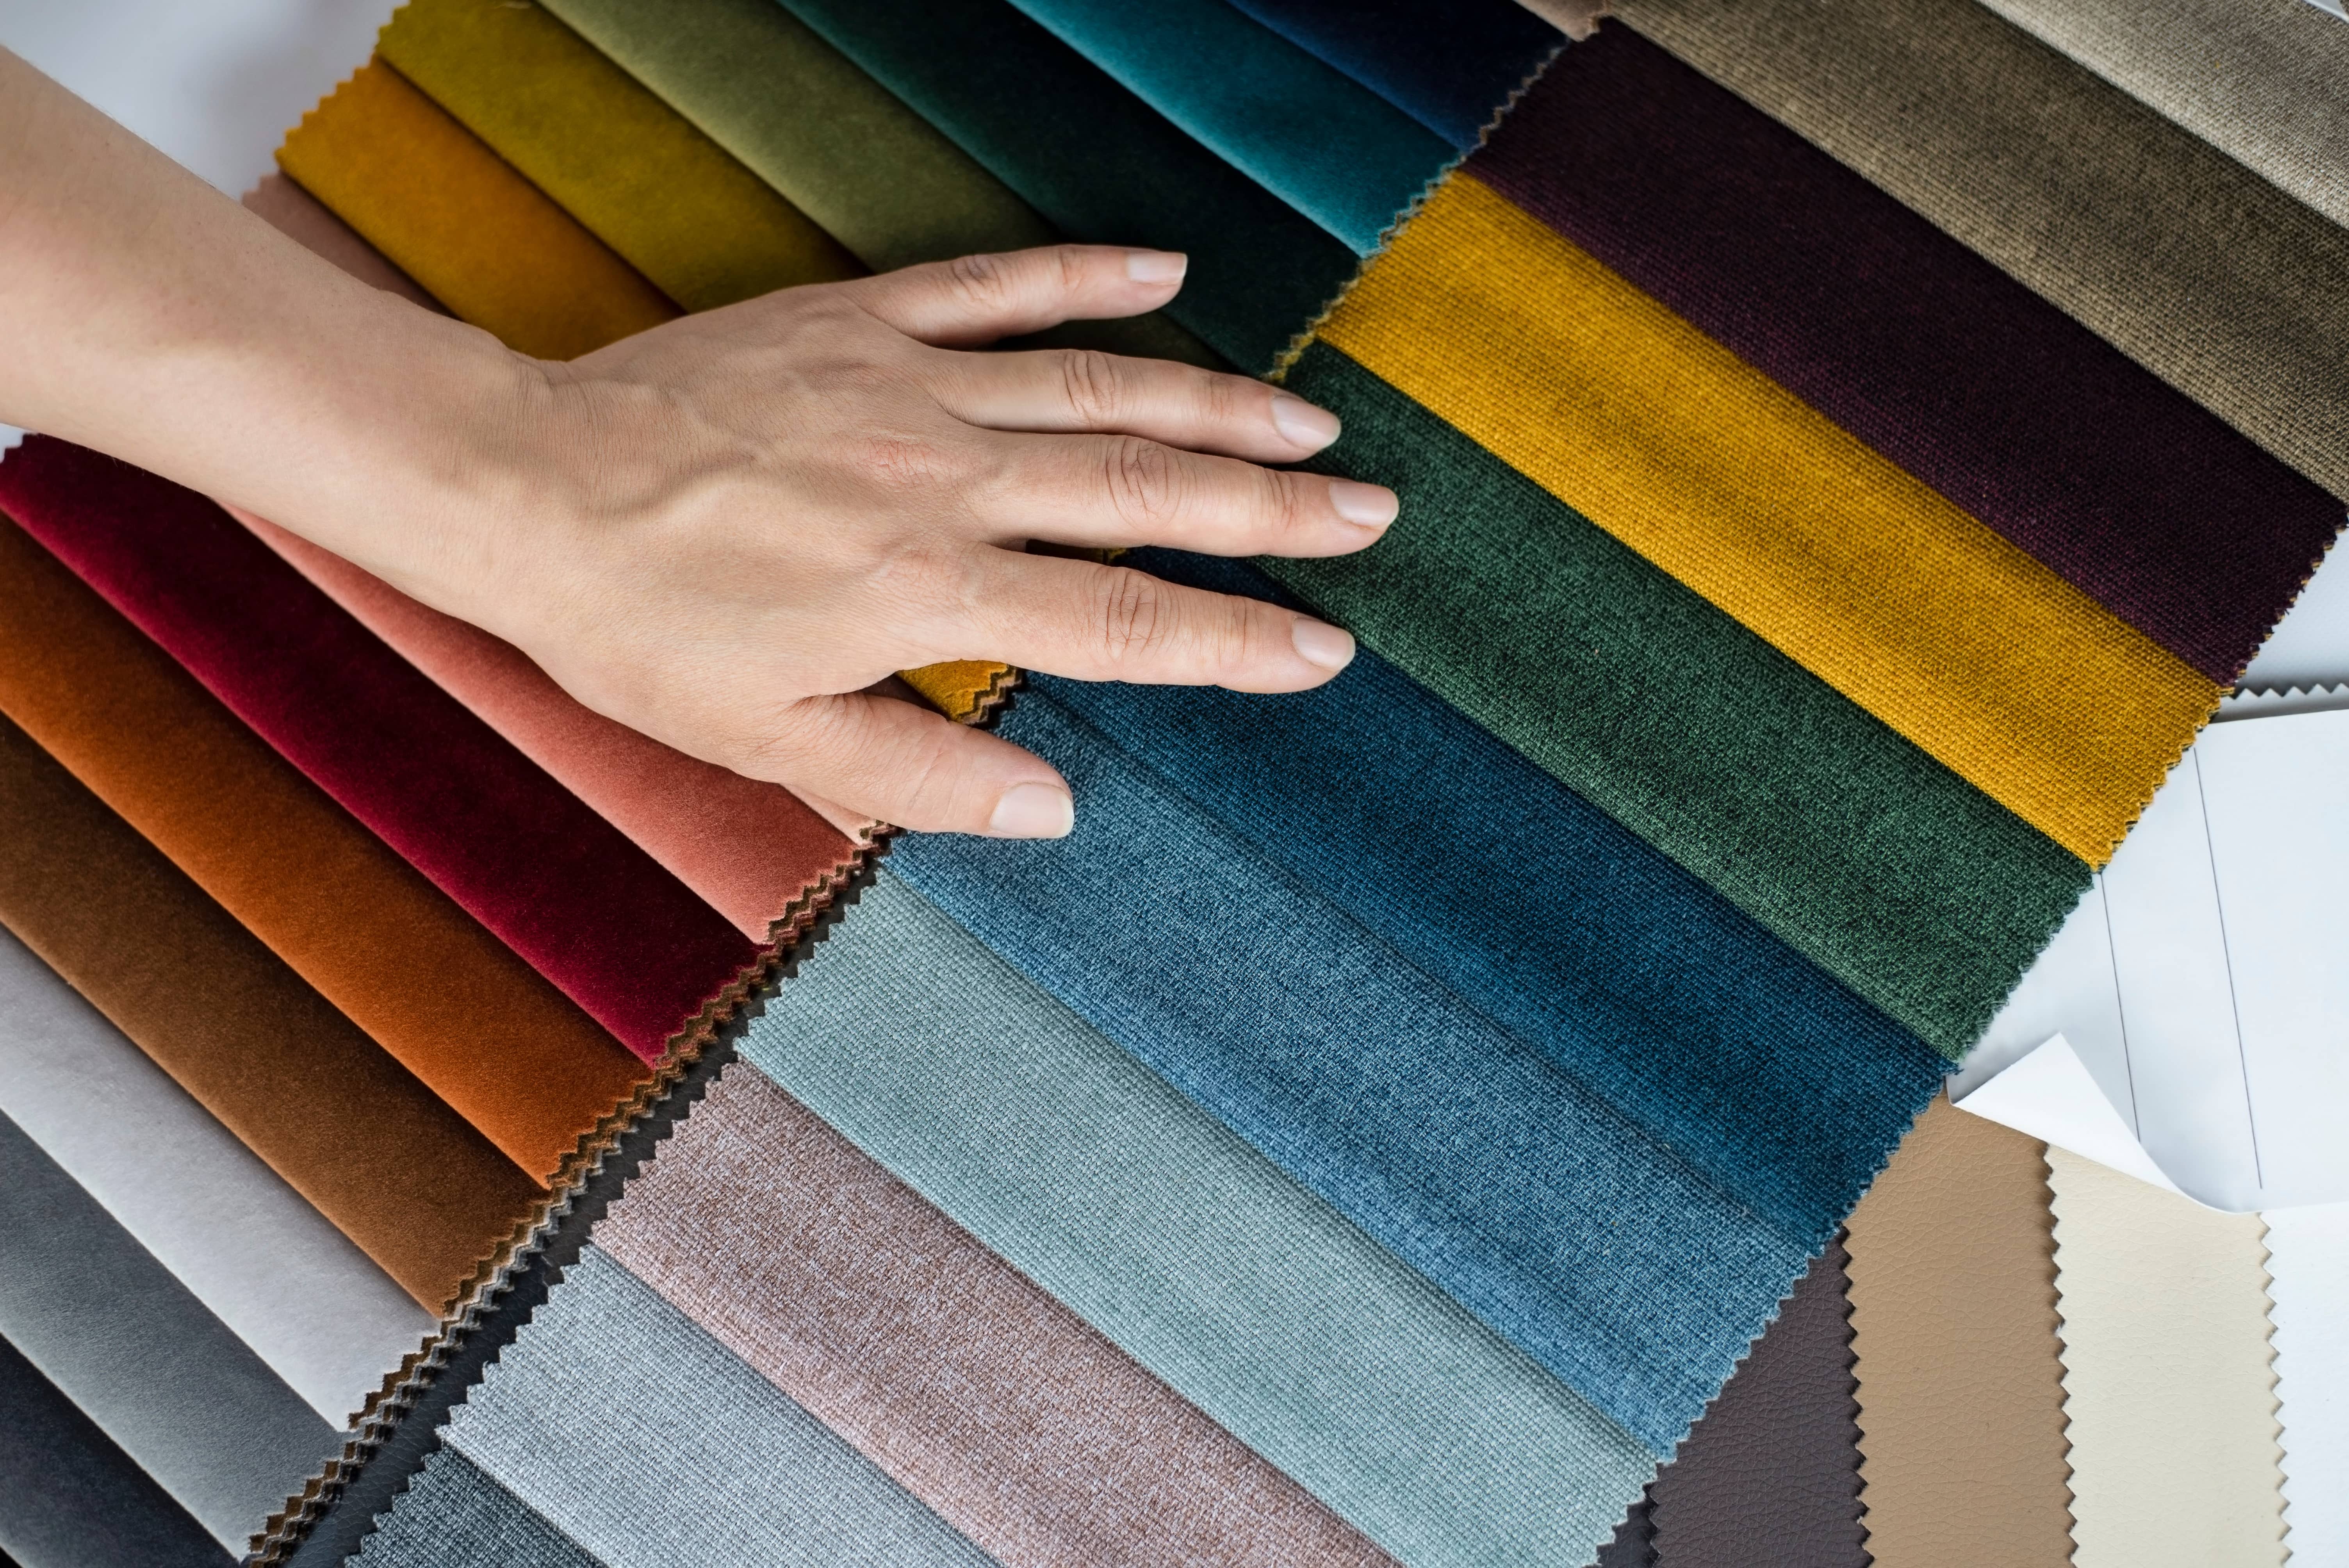 A woman's hand glazing over multi-colored fabrics.